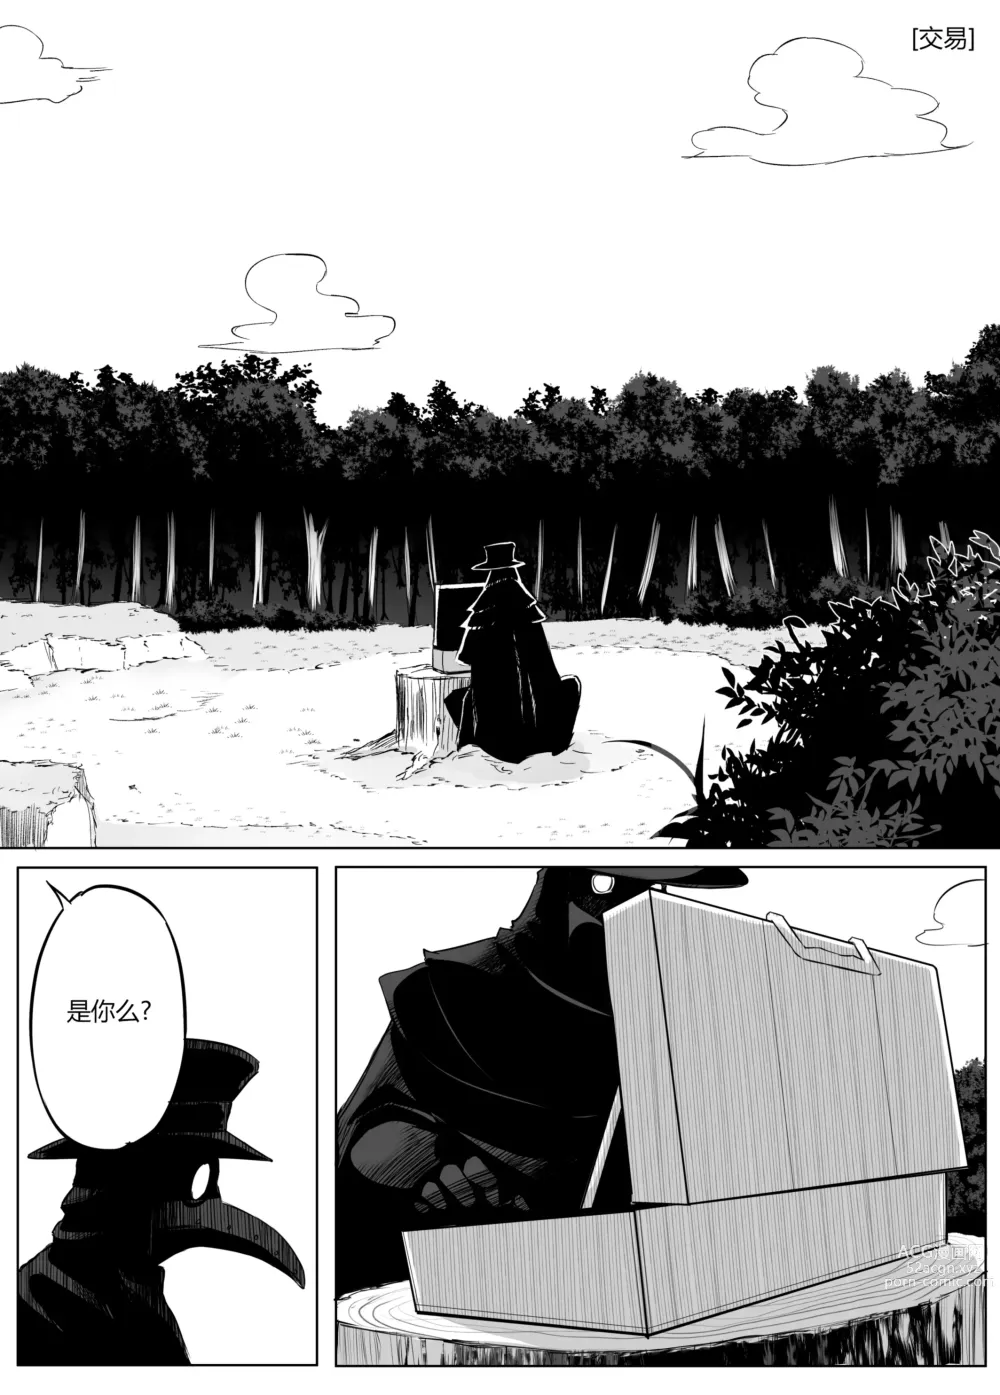 Page 1 of manga Trade